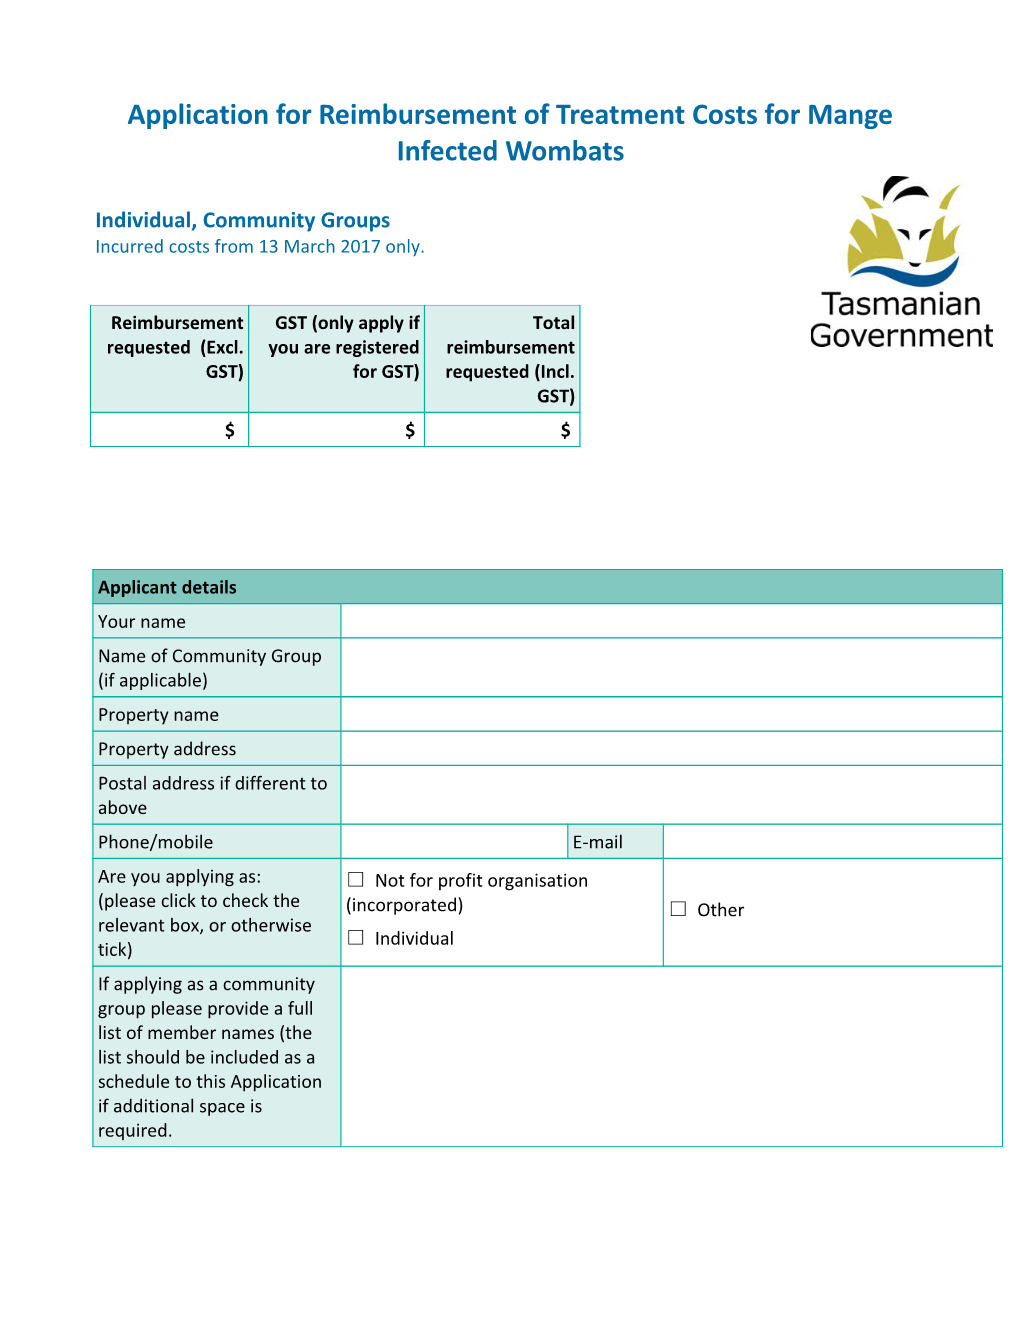 Application Form Reimbursement of Costs Wombat Mange